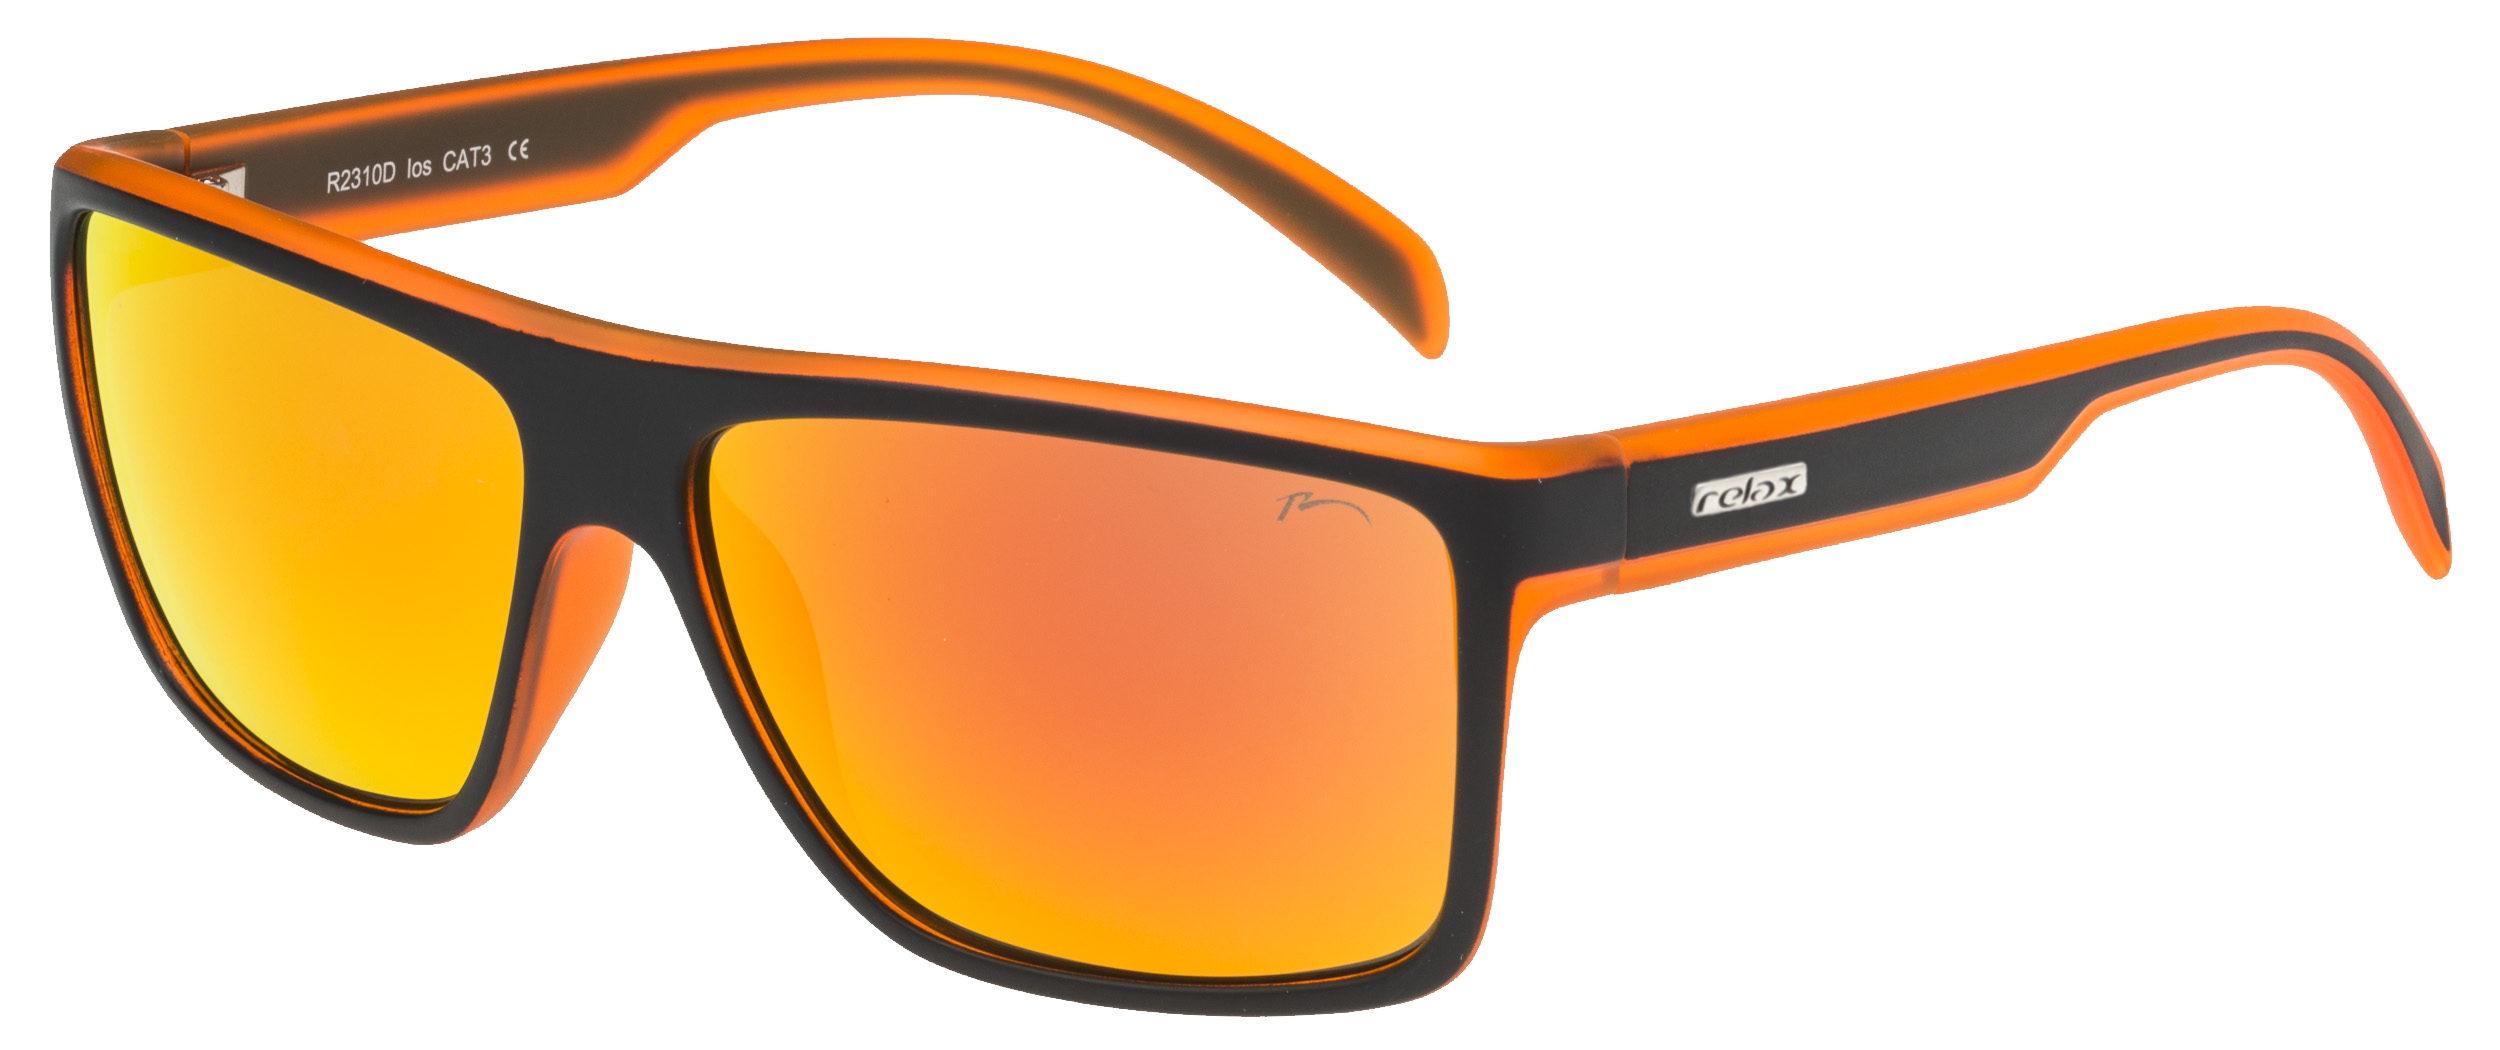 Sunglasses  Relax  Ios  R2310D standard